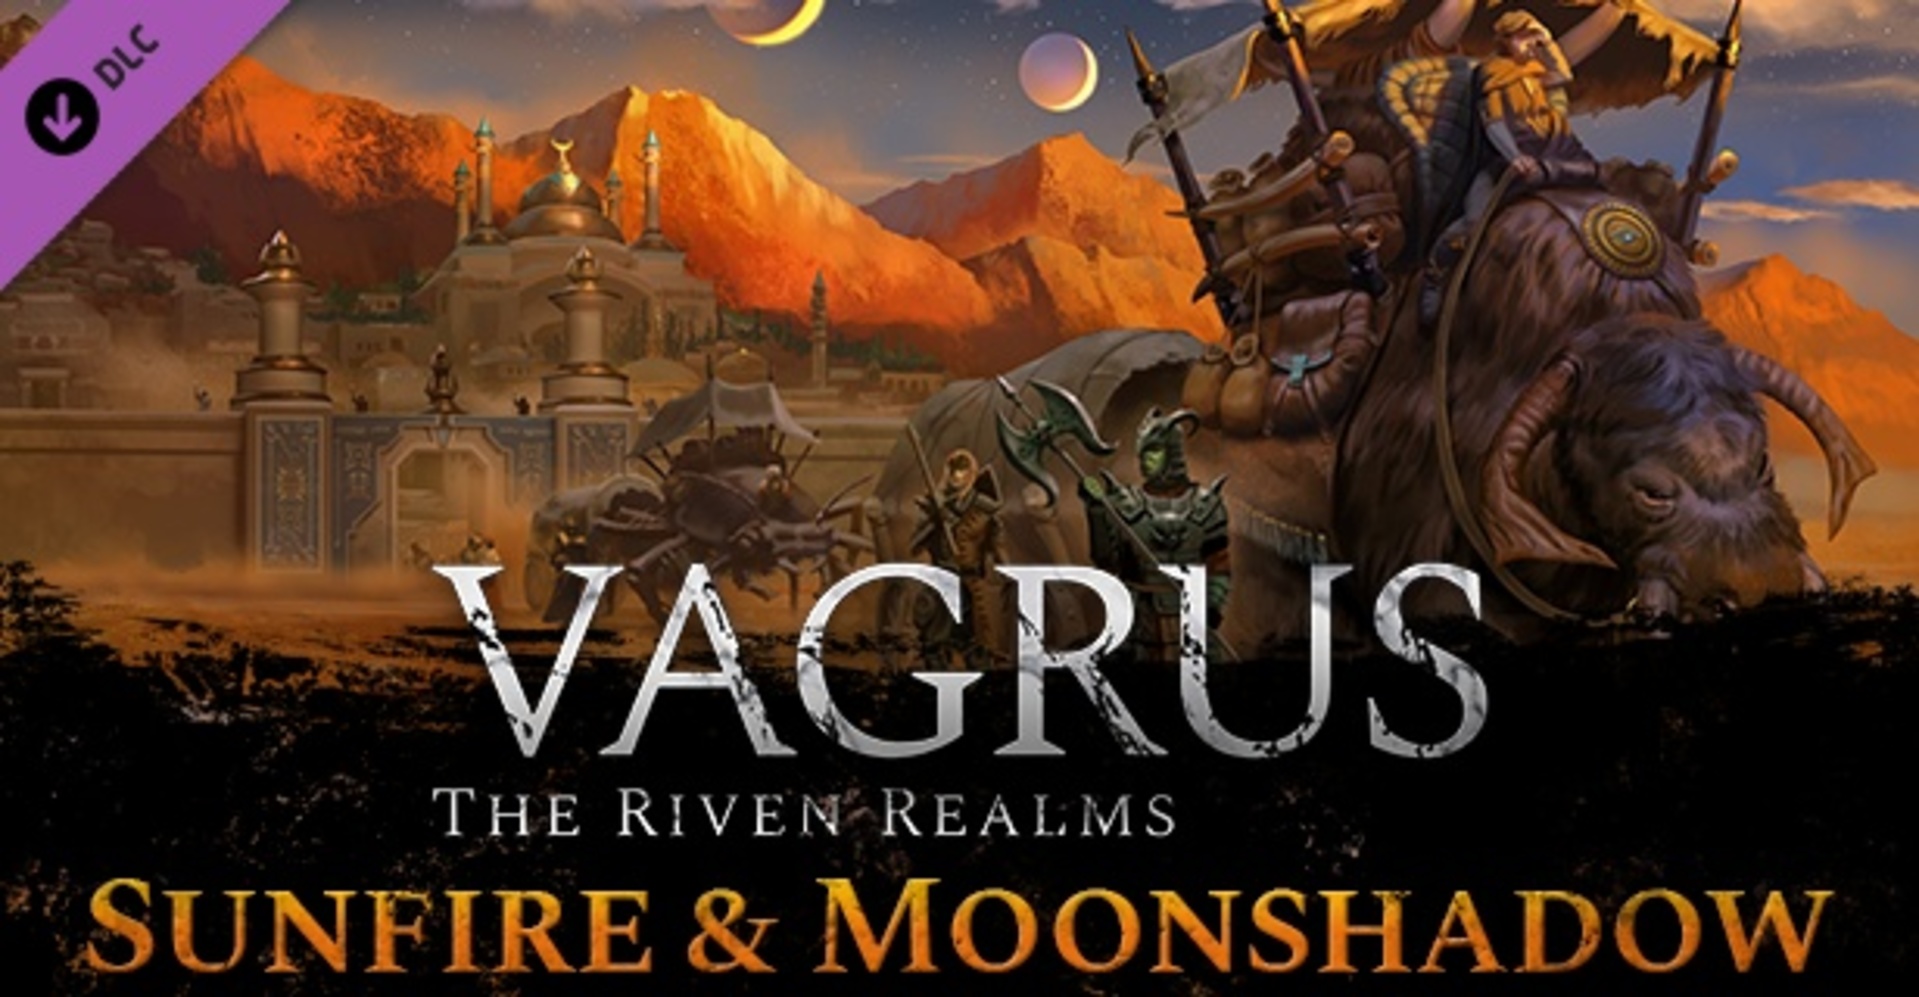 Vagrus - The Riven Realms